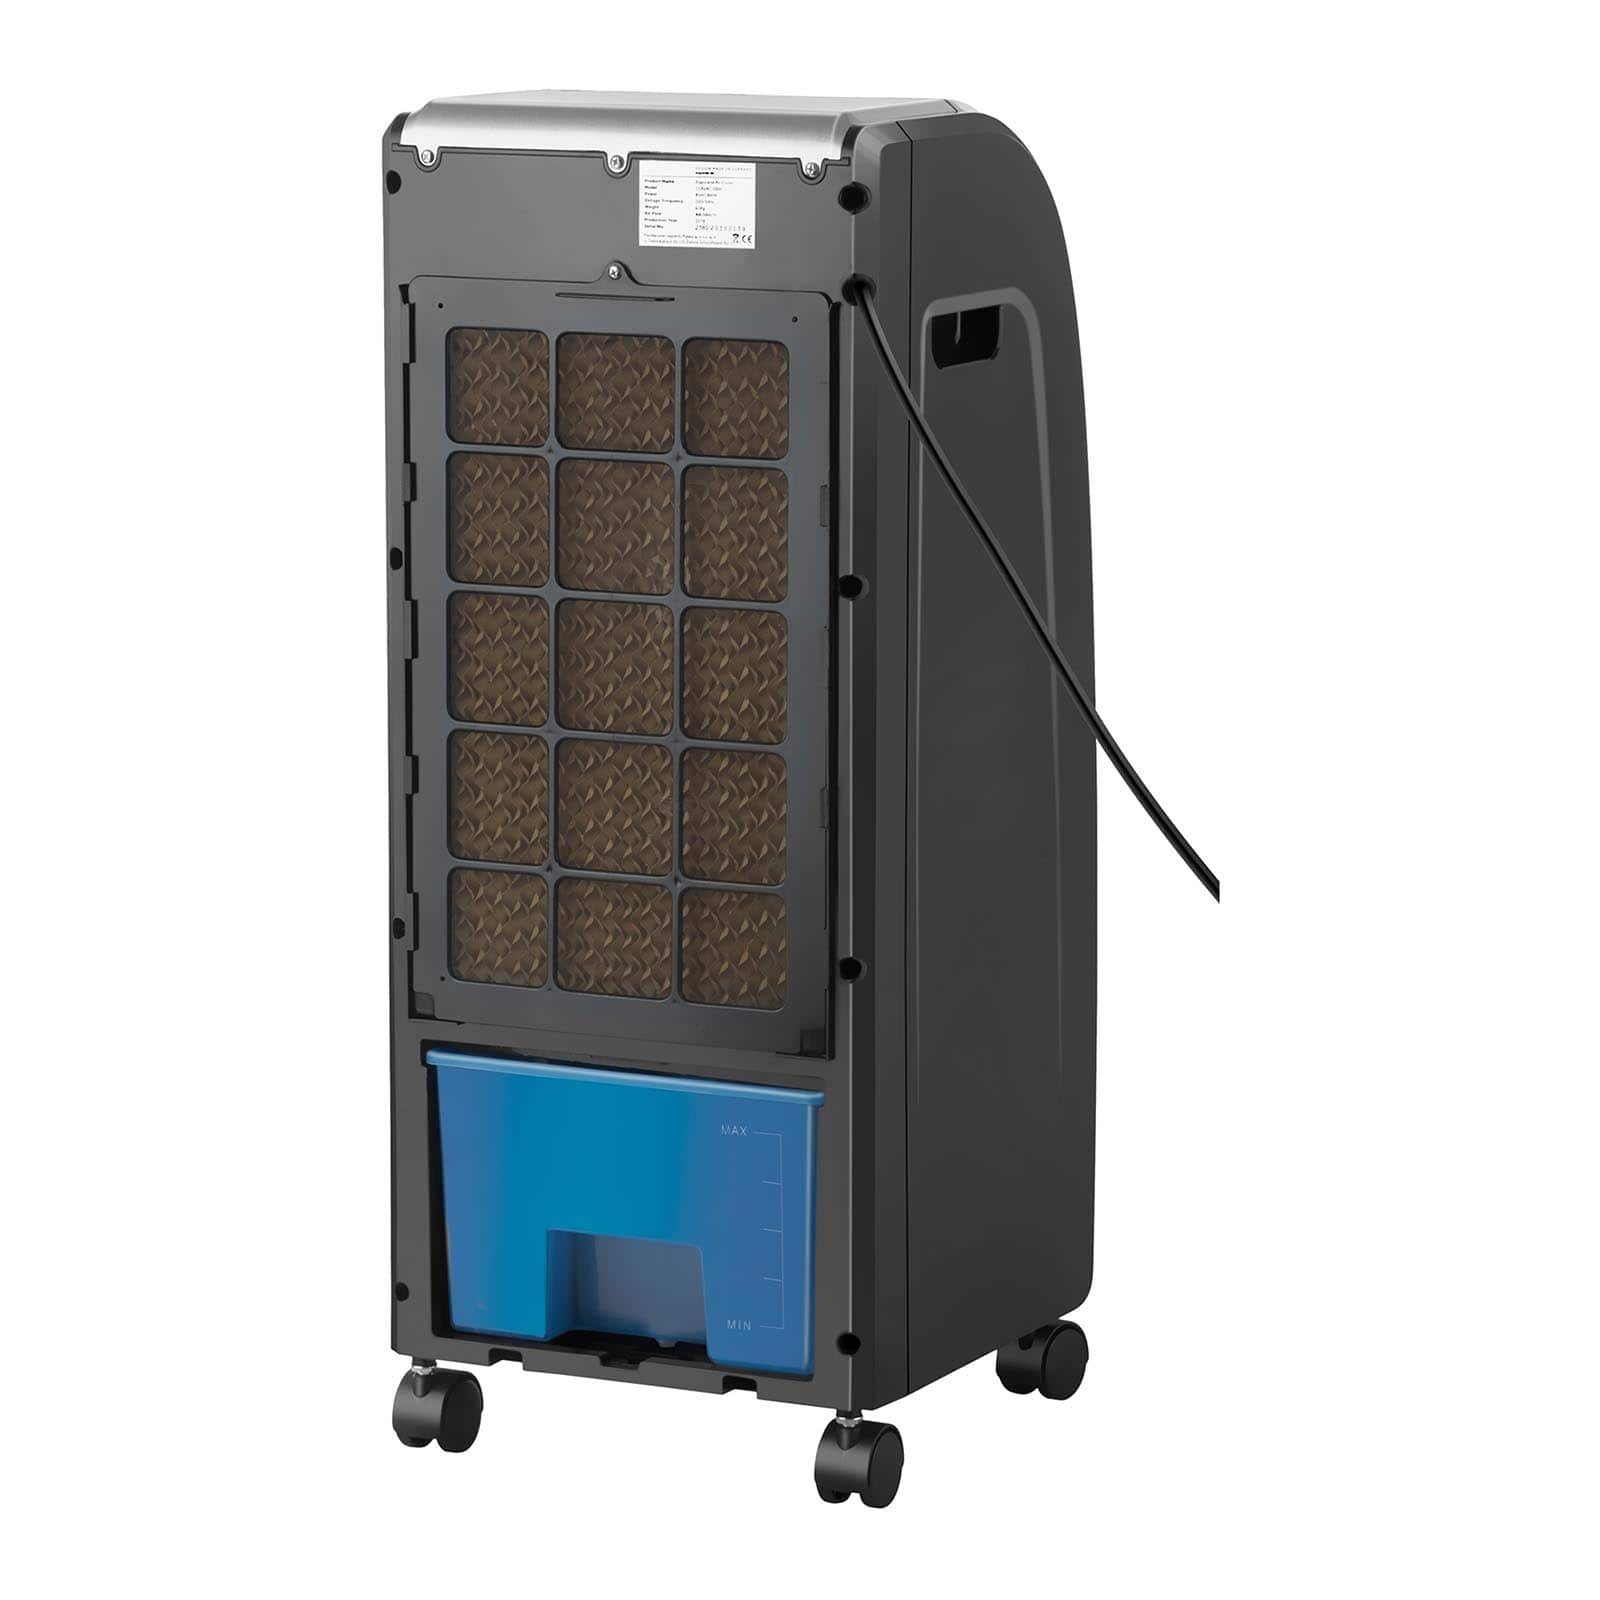 Uniprodo Ventilatorkombigerät Luftkühler mobil mit in - 4 Wassertank - 1 Heizfunktion 6 L